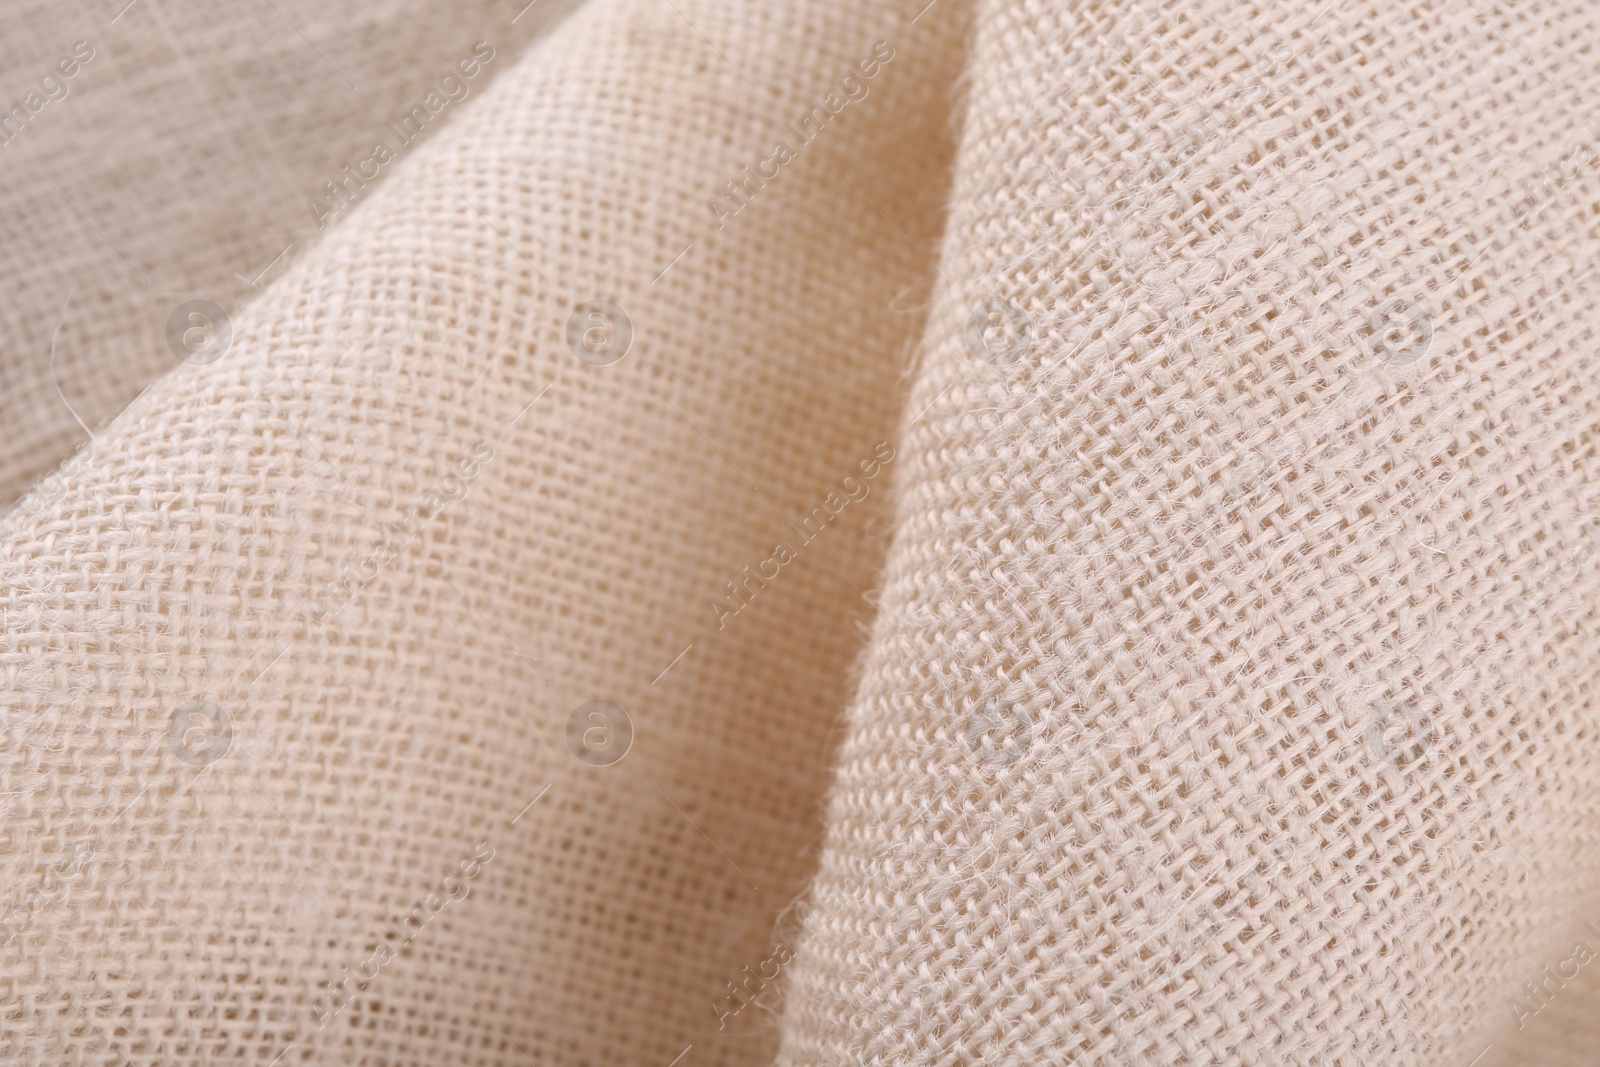 Photo of Texture of beige burlap fabric, closeup view